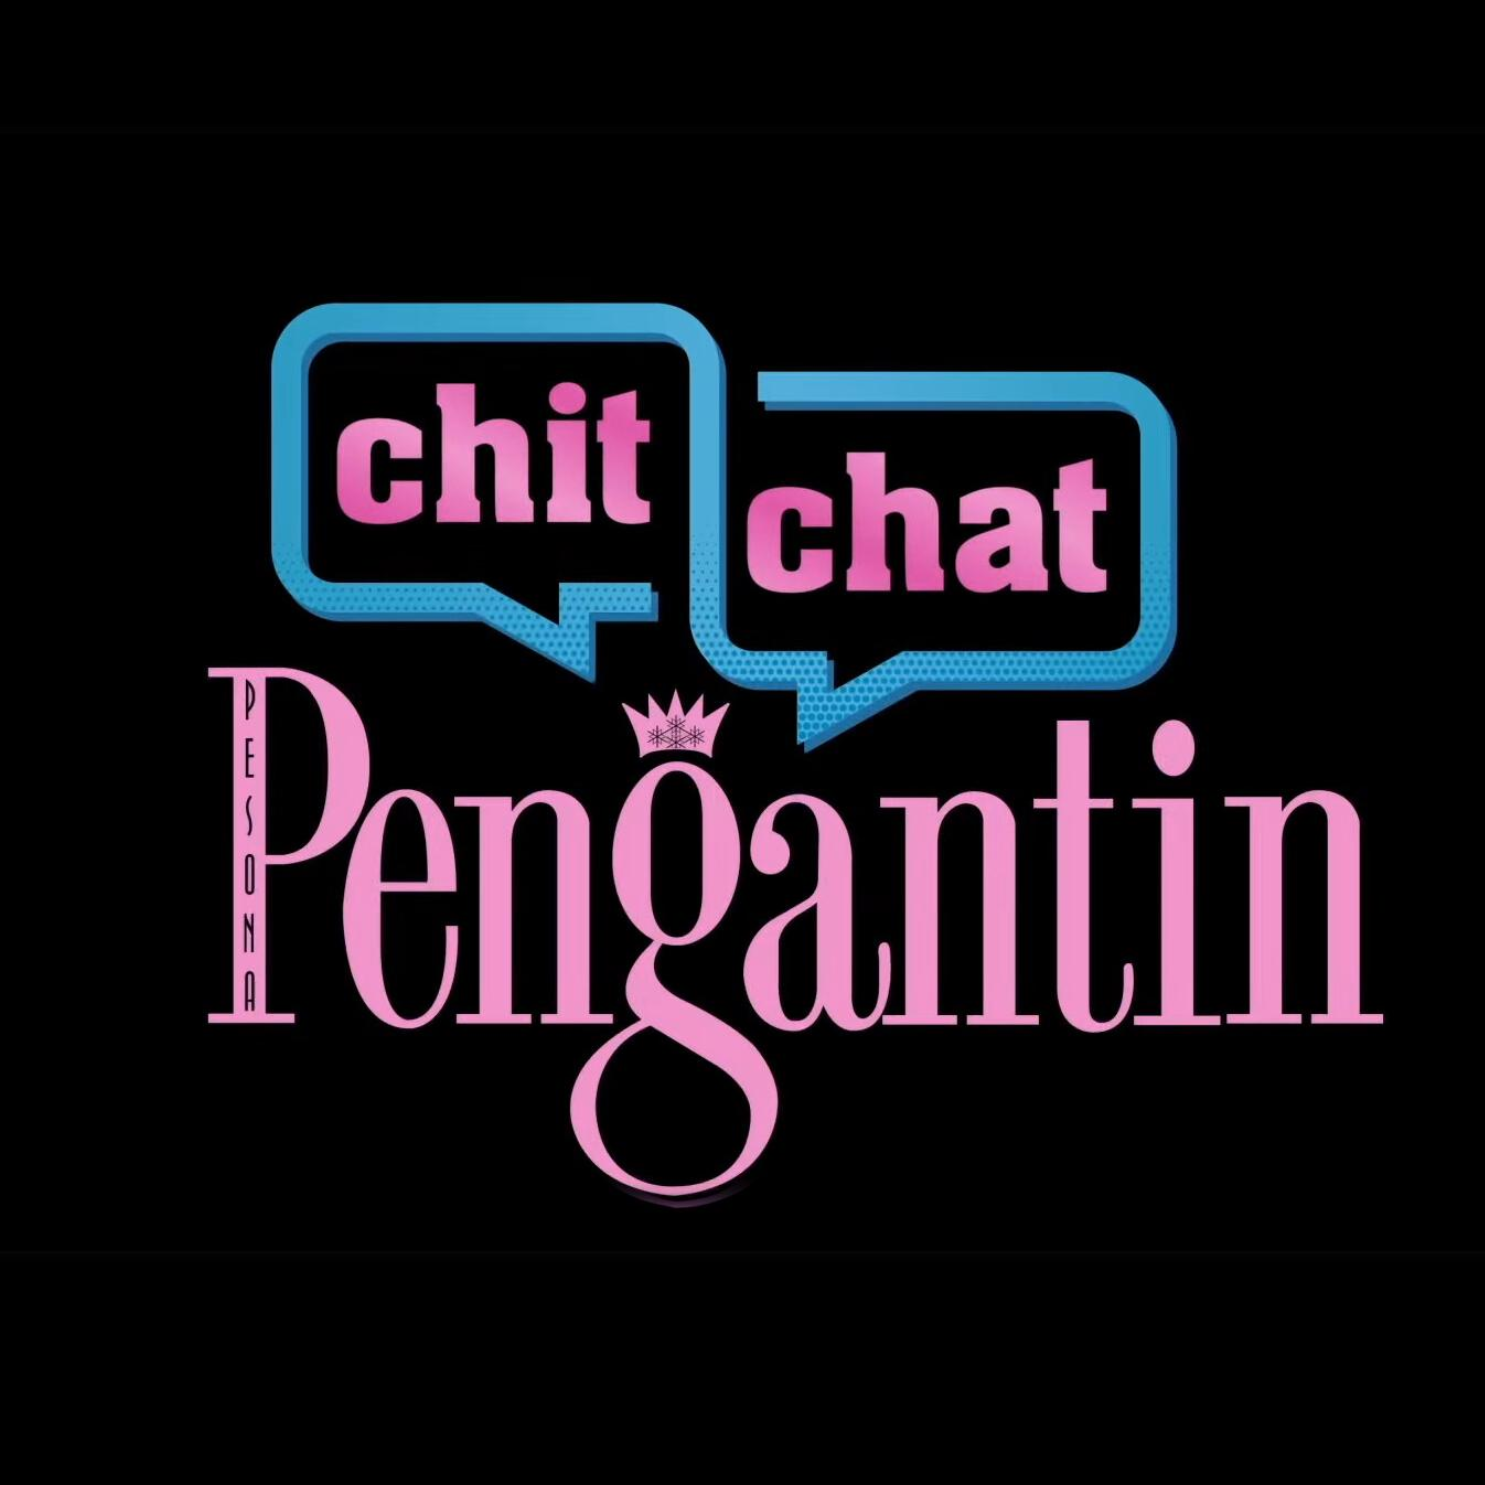 Chit Chat Pengantin - SEENI Podcast [BM]